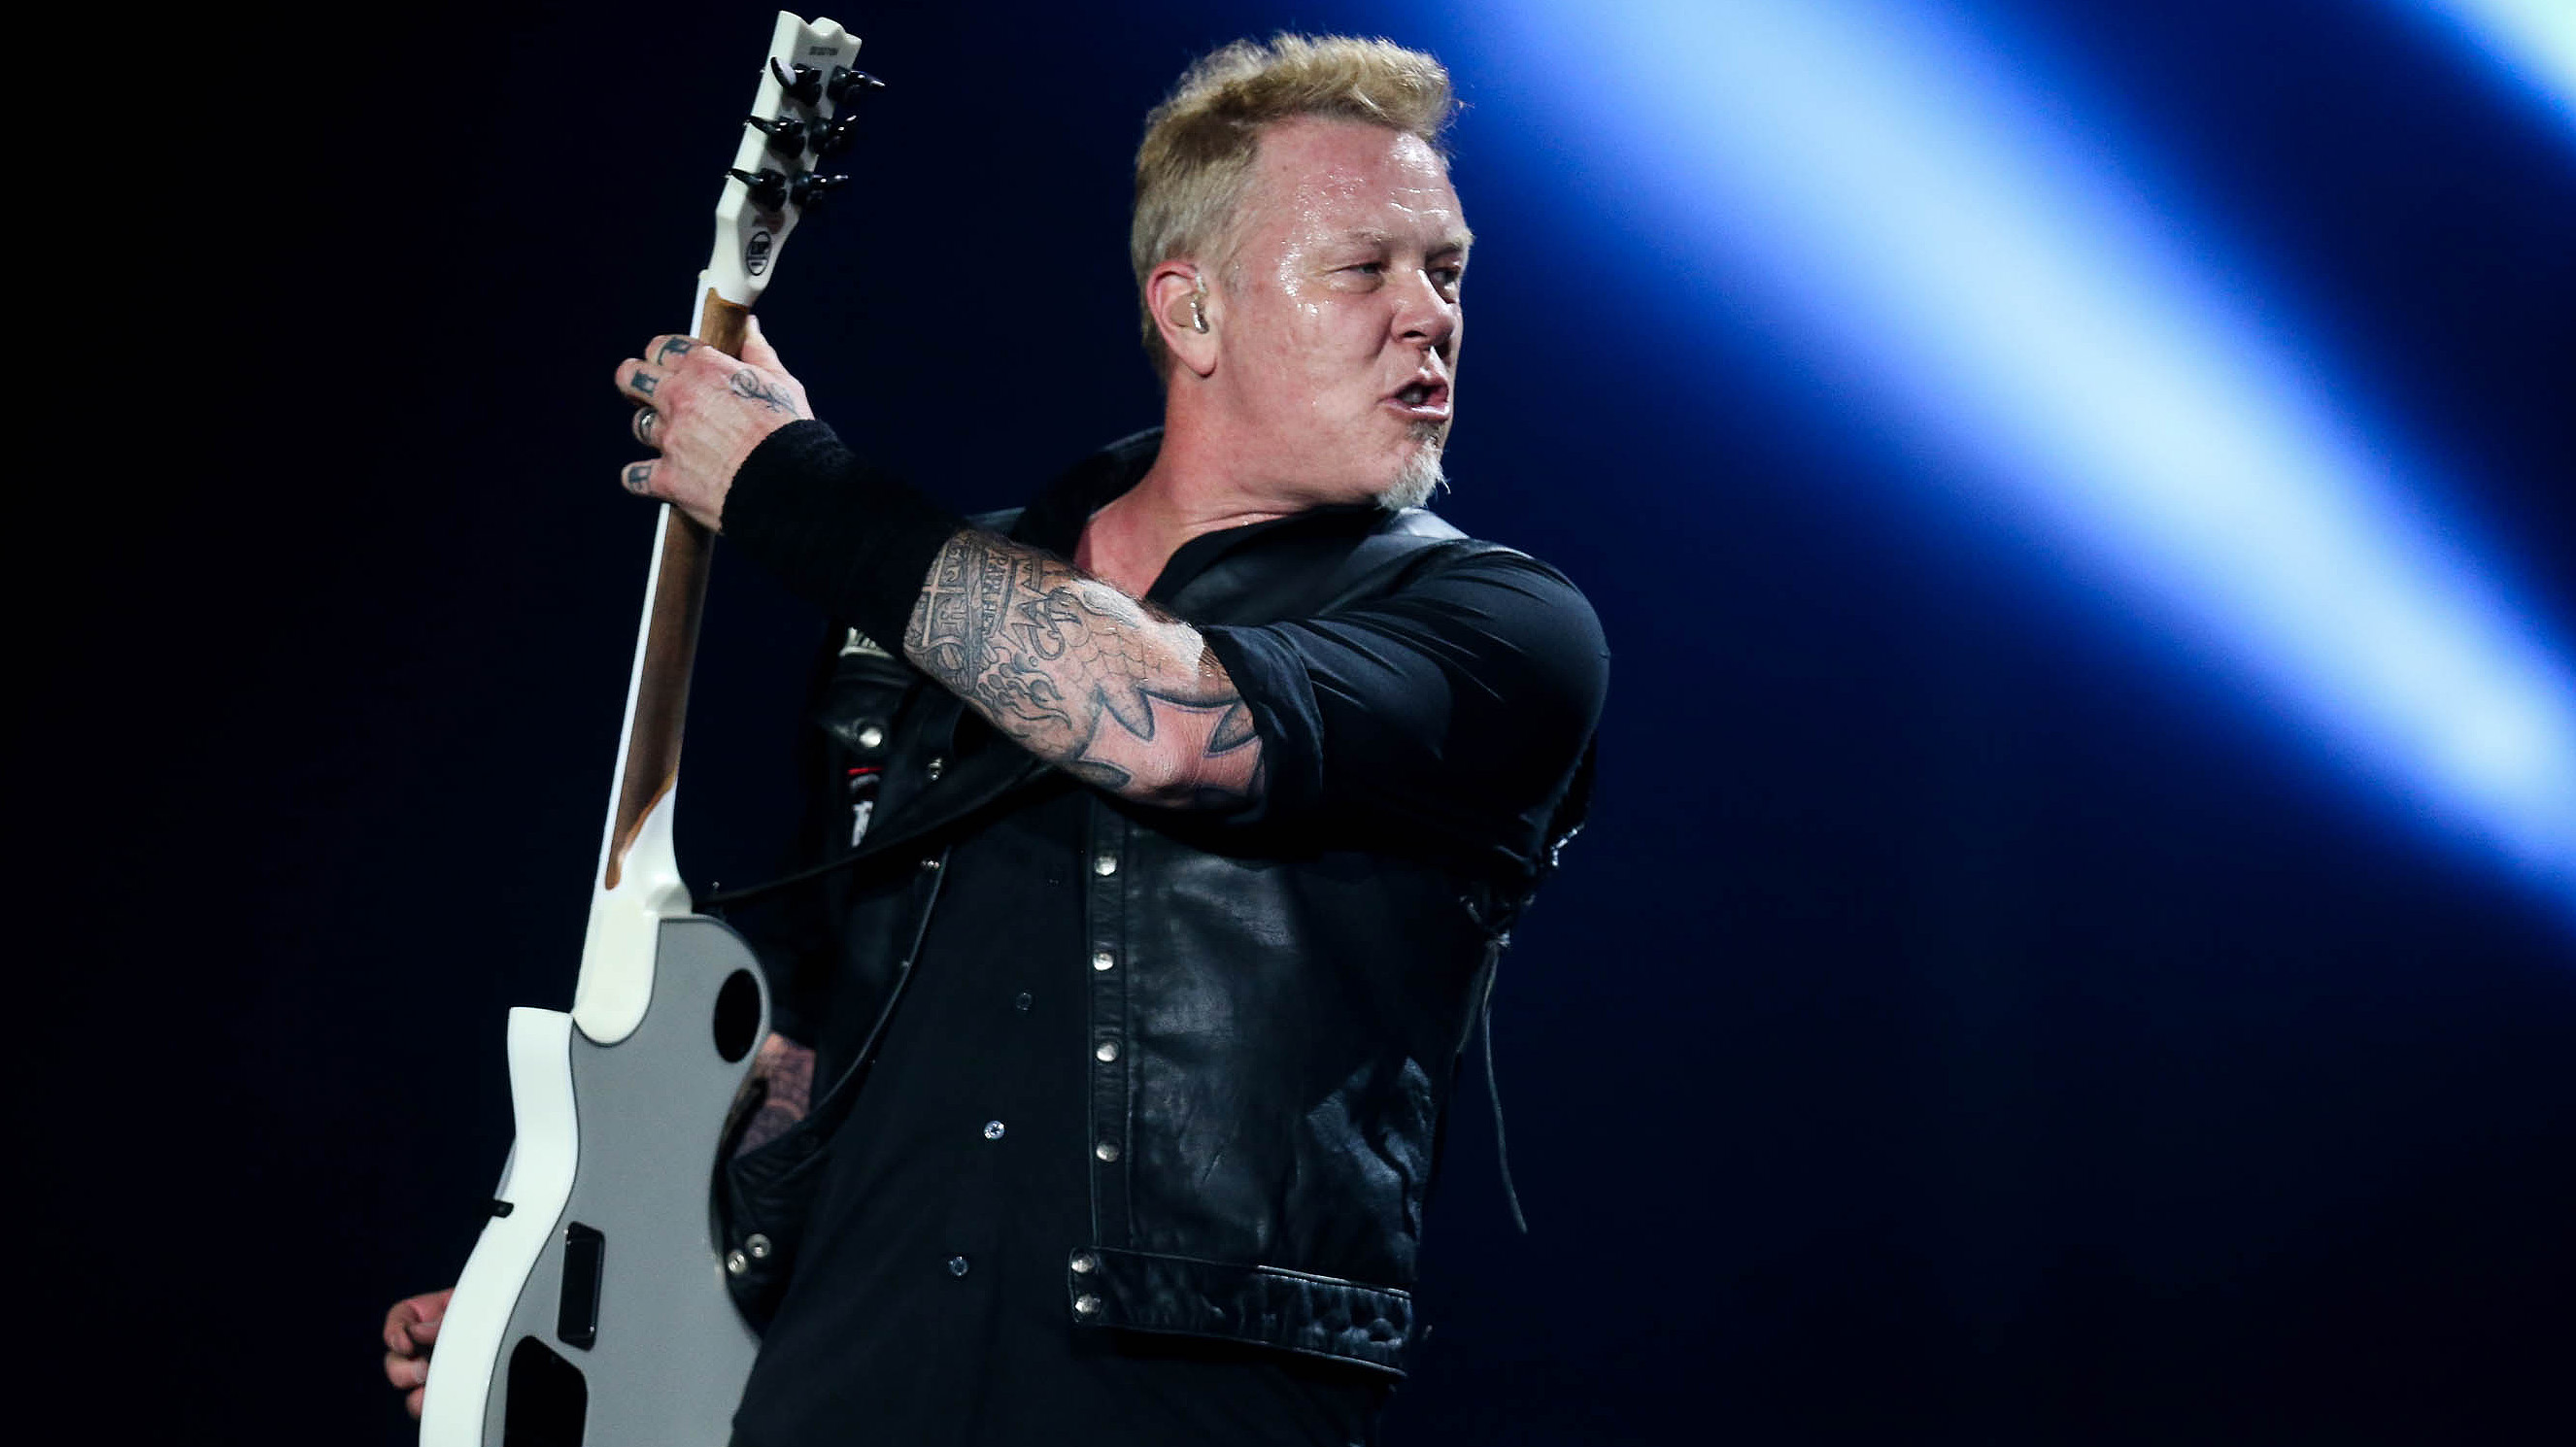 Líder de Metallica debutará como actor en película protagonizada por Zac Efron